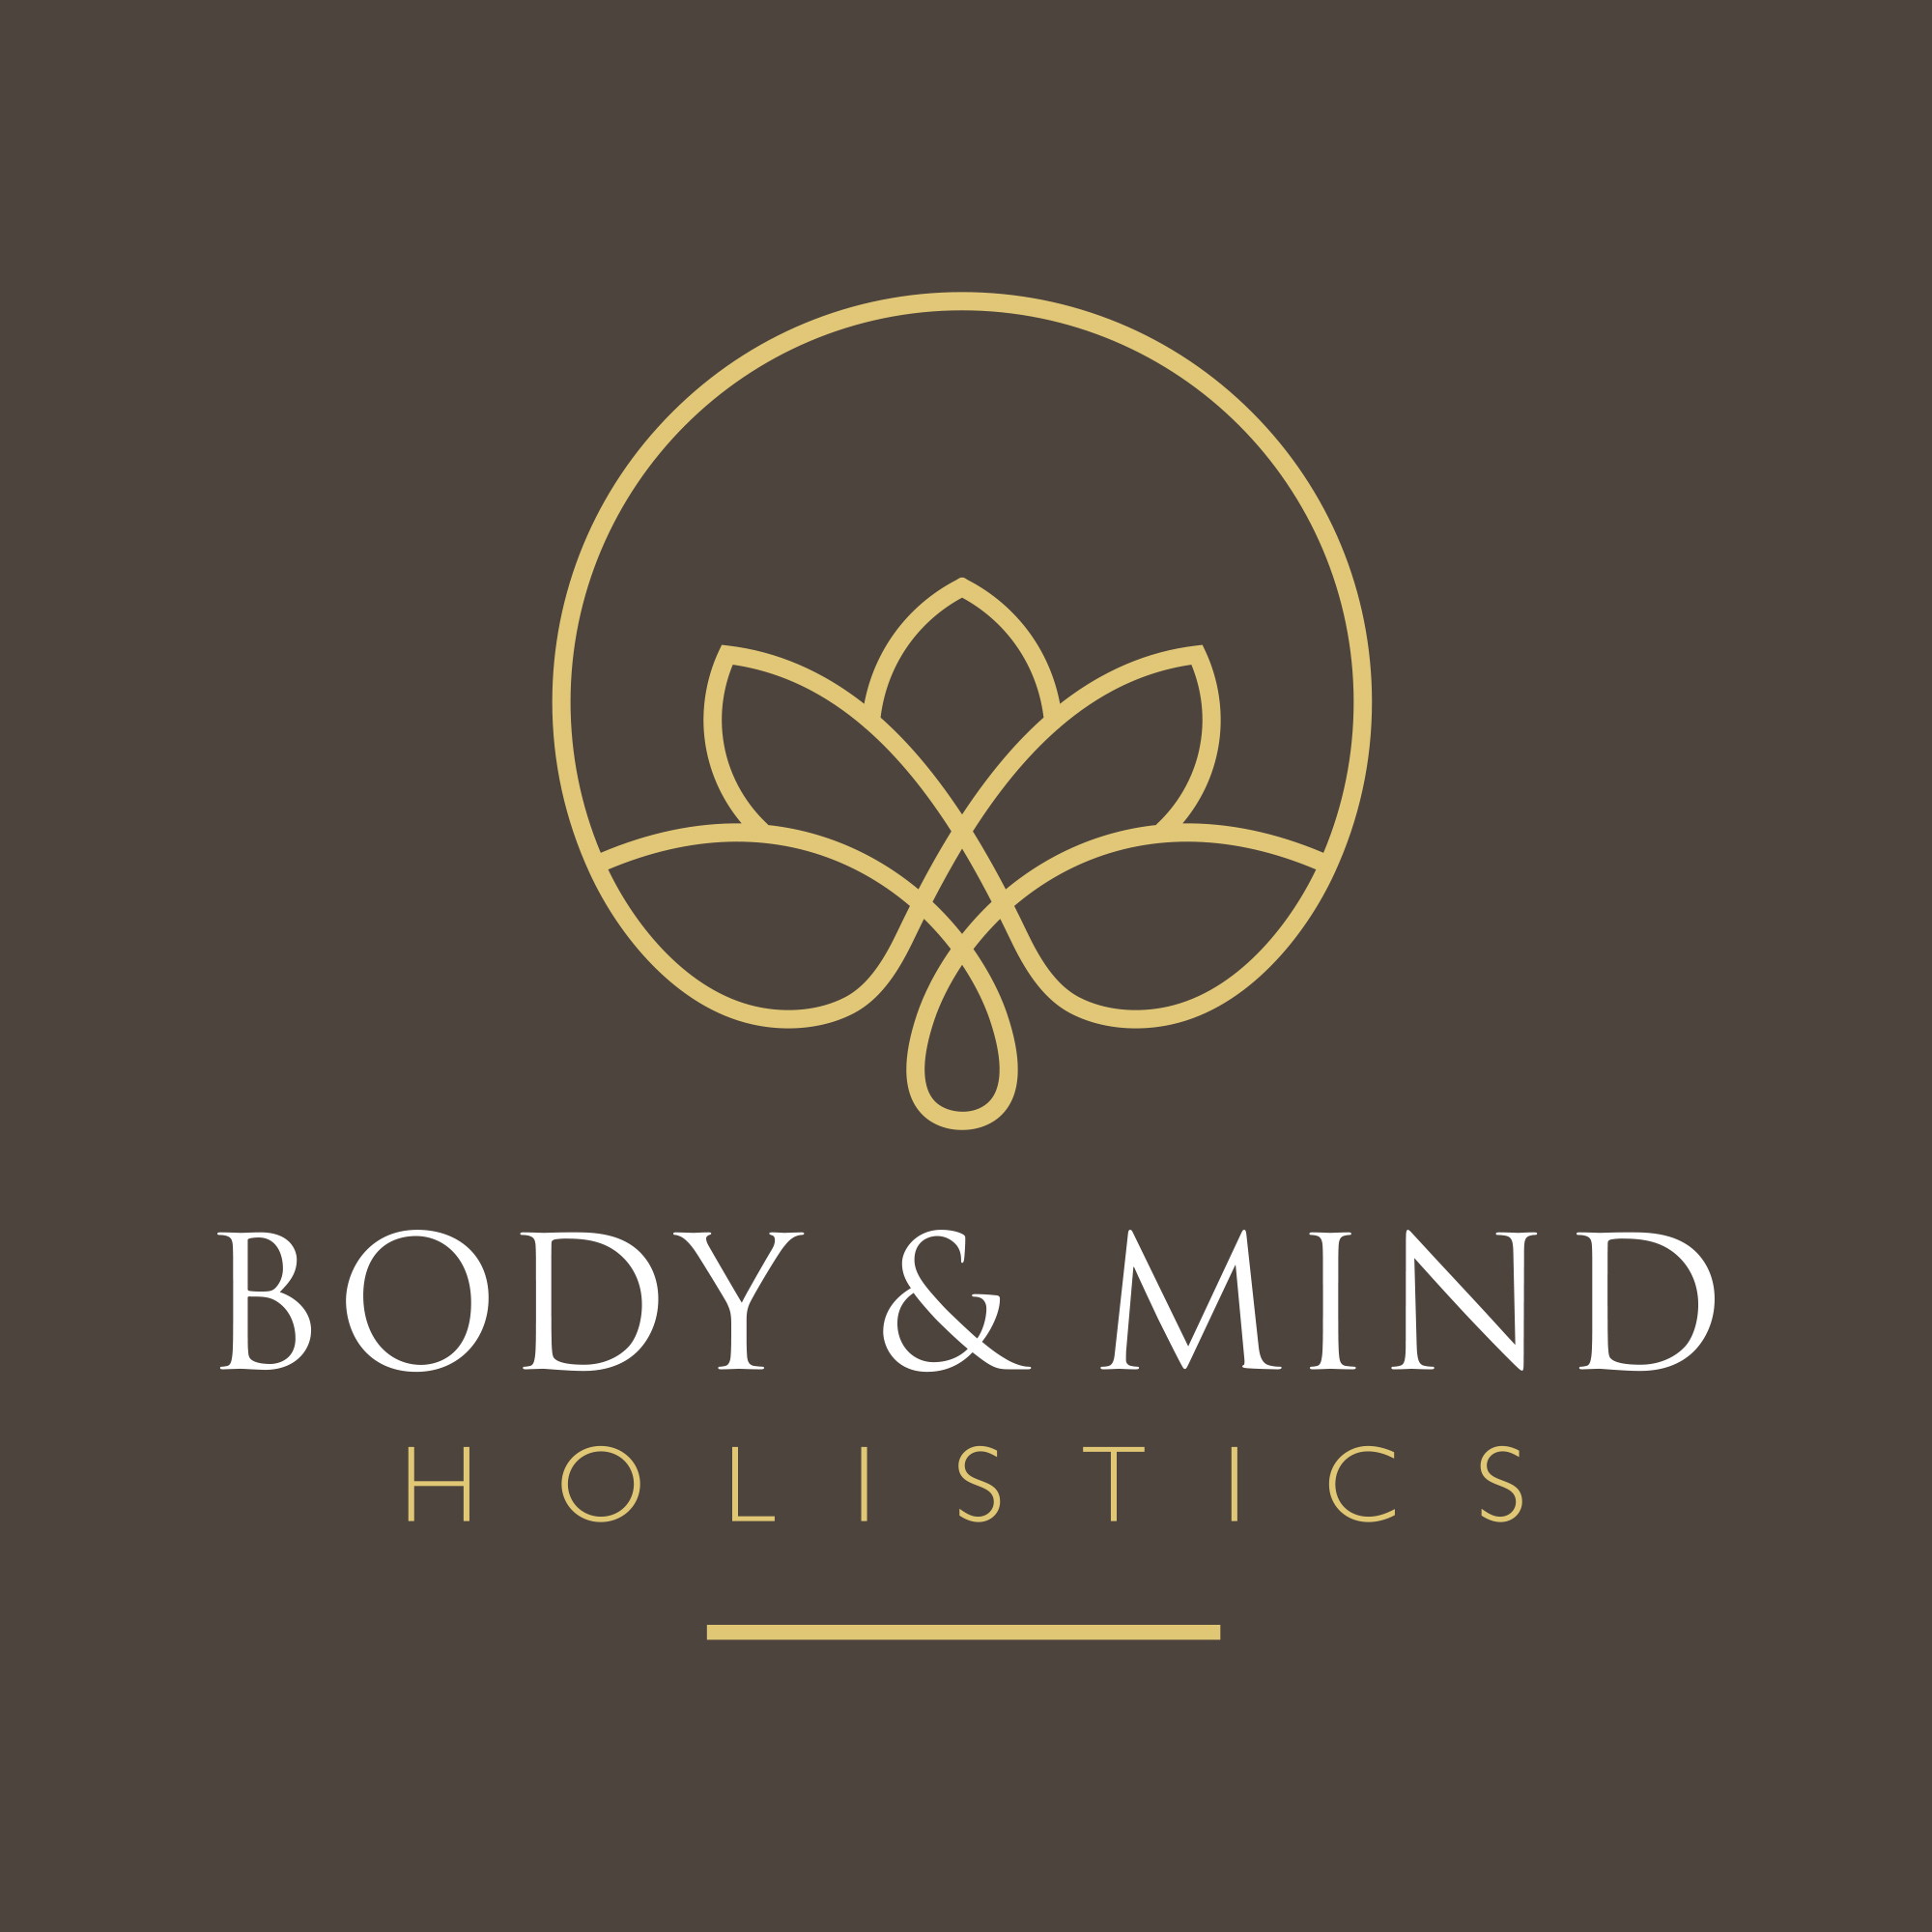 Body and Mind holistic logo